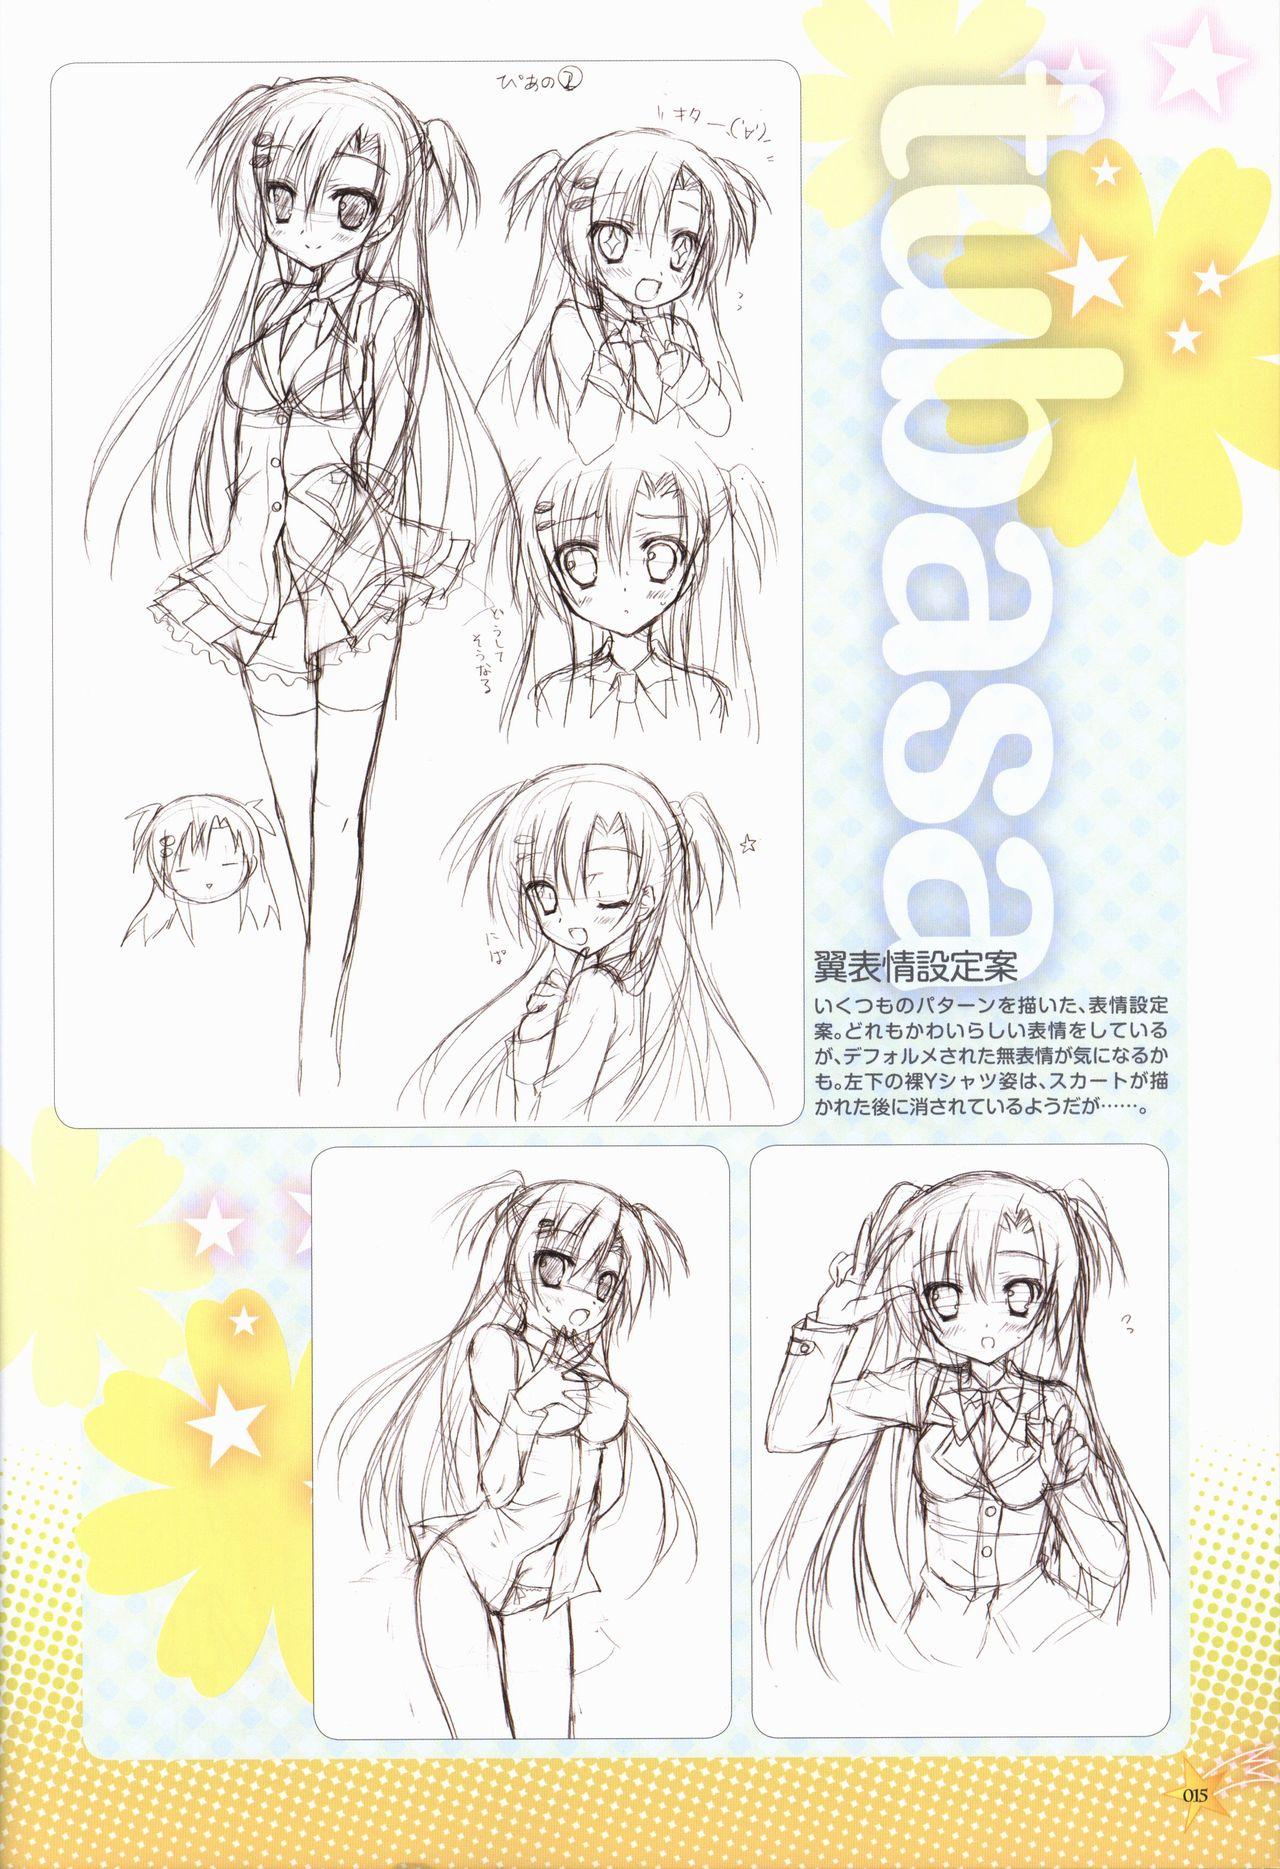 KisaragiGOLD★STAR Visual Fanbook 15